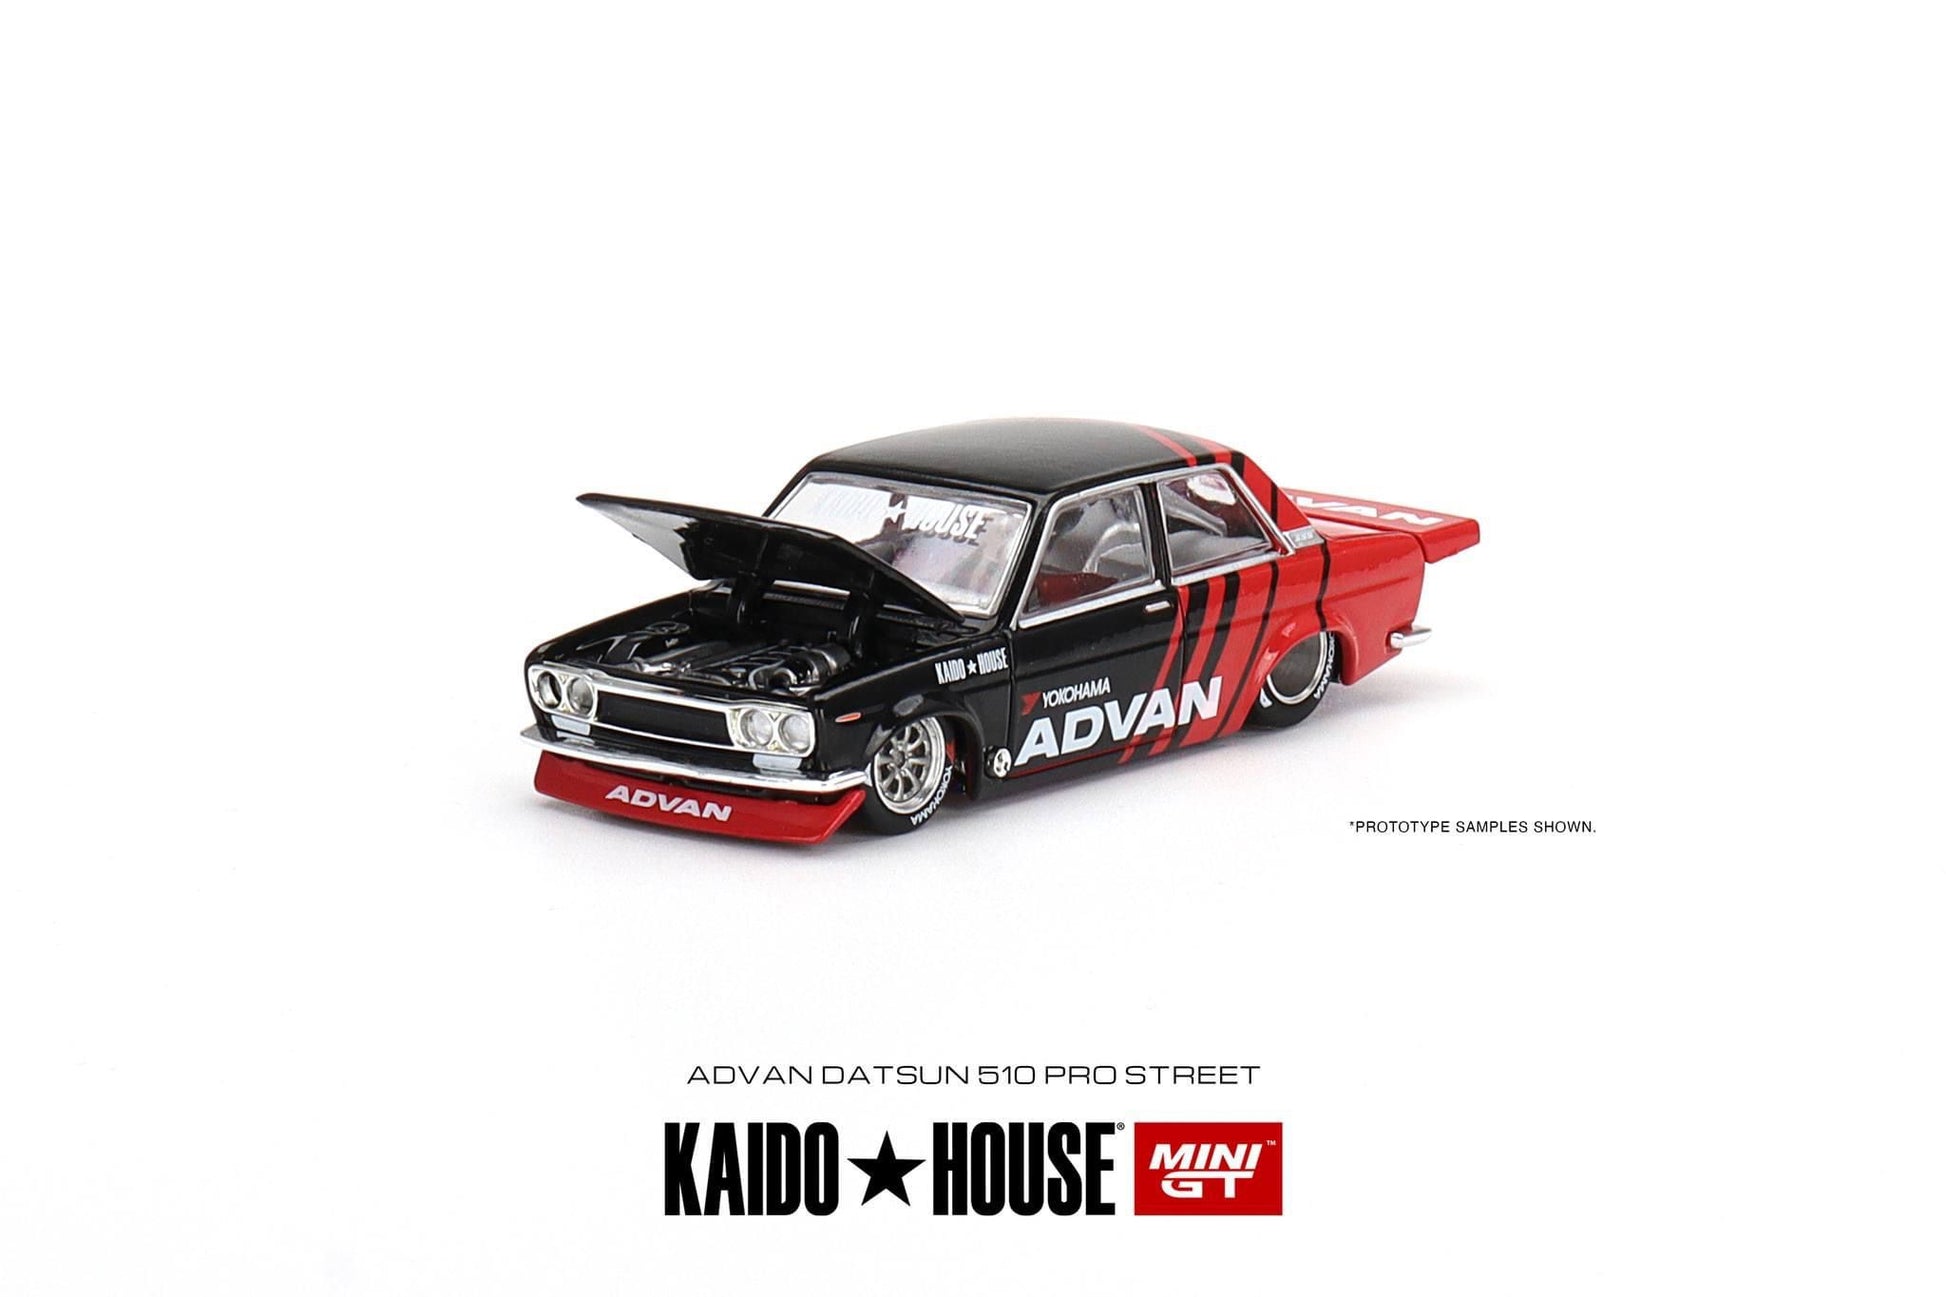 Mini GT x Kaido House 1:64 Datsun 510 Pro Street / Wagon Advan Normal Ver. / Chase Ver. Mini GT